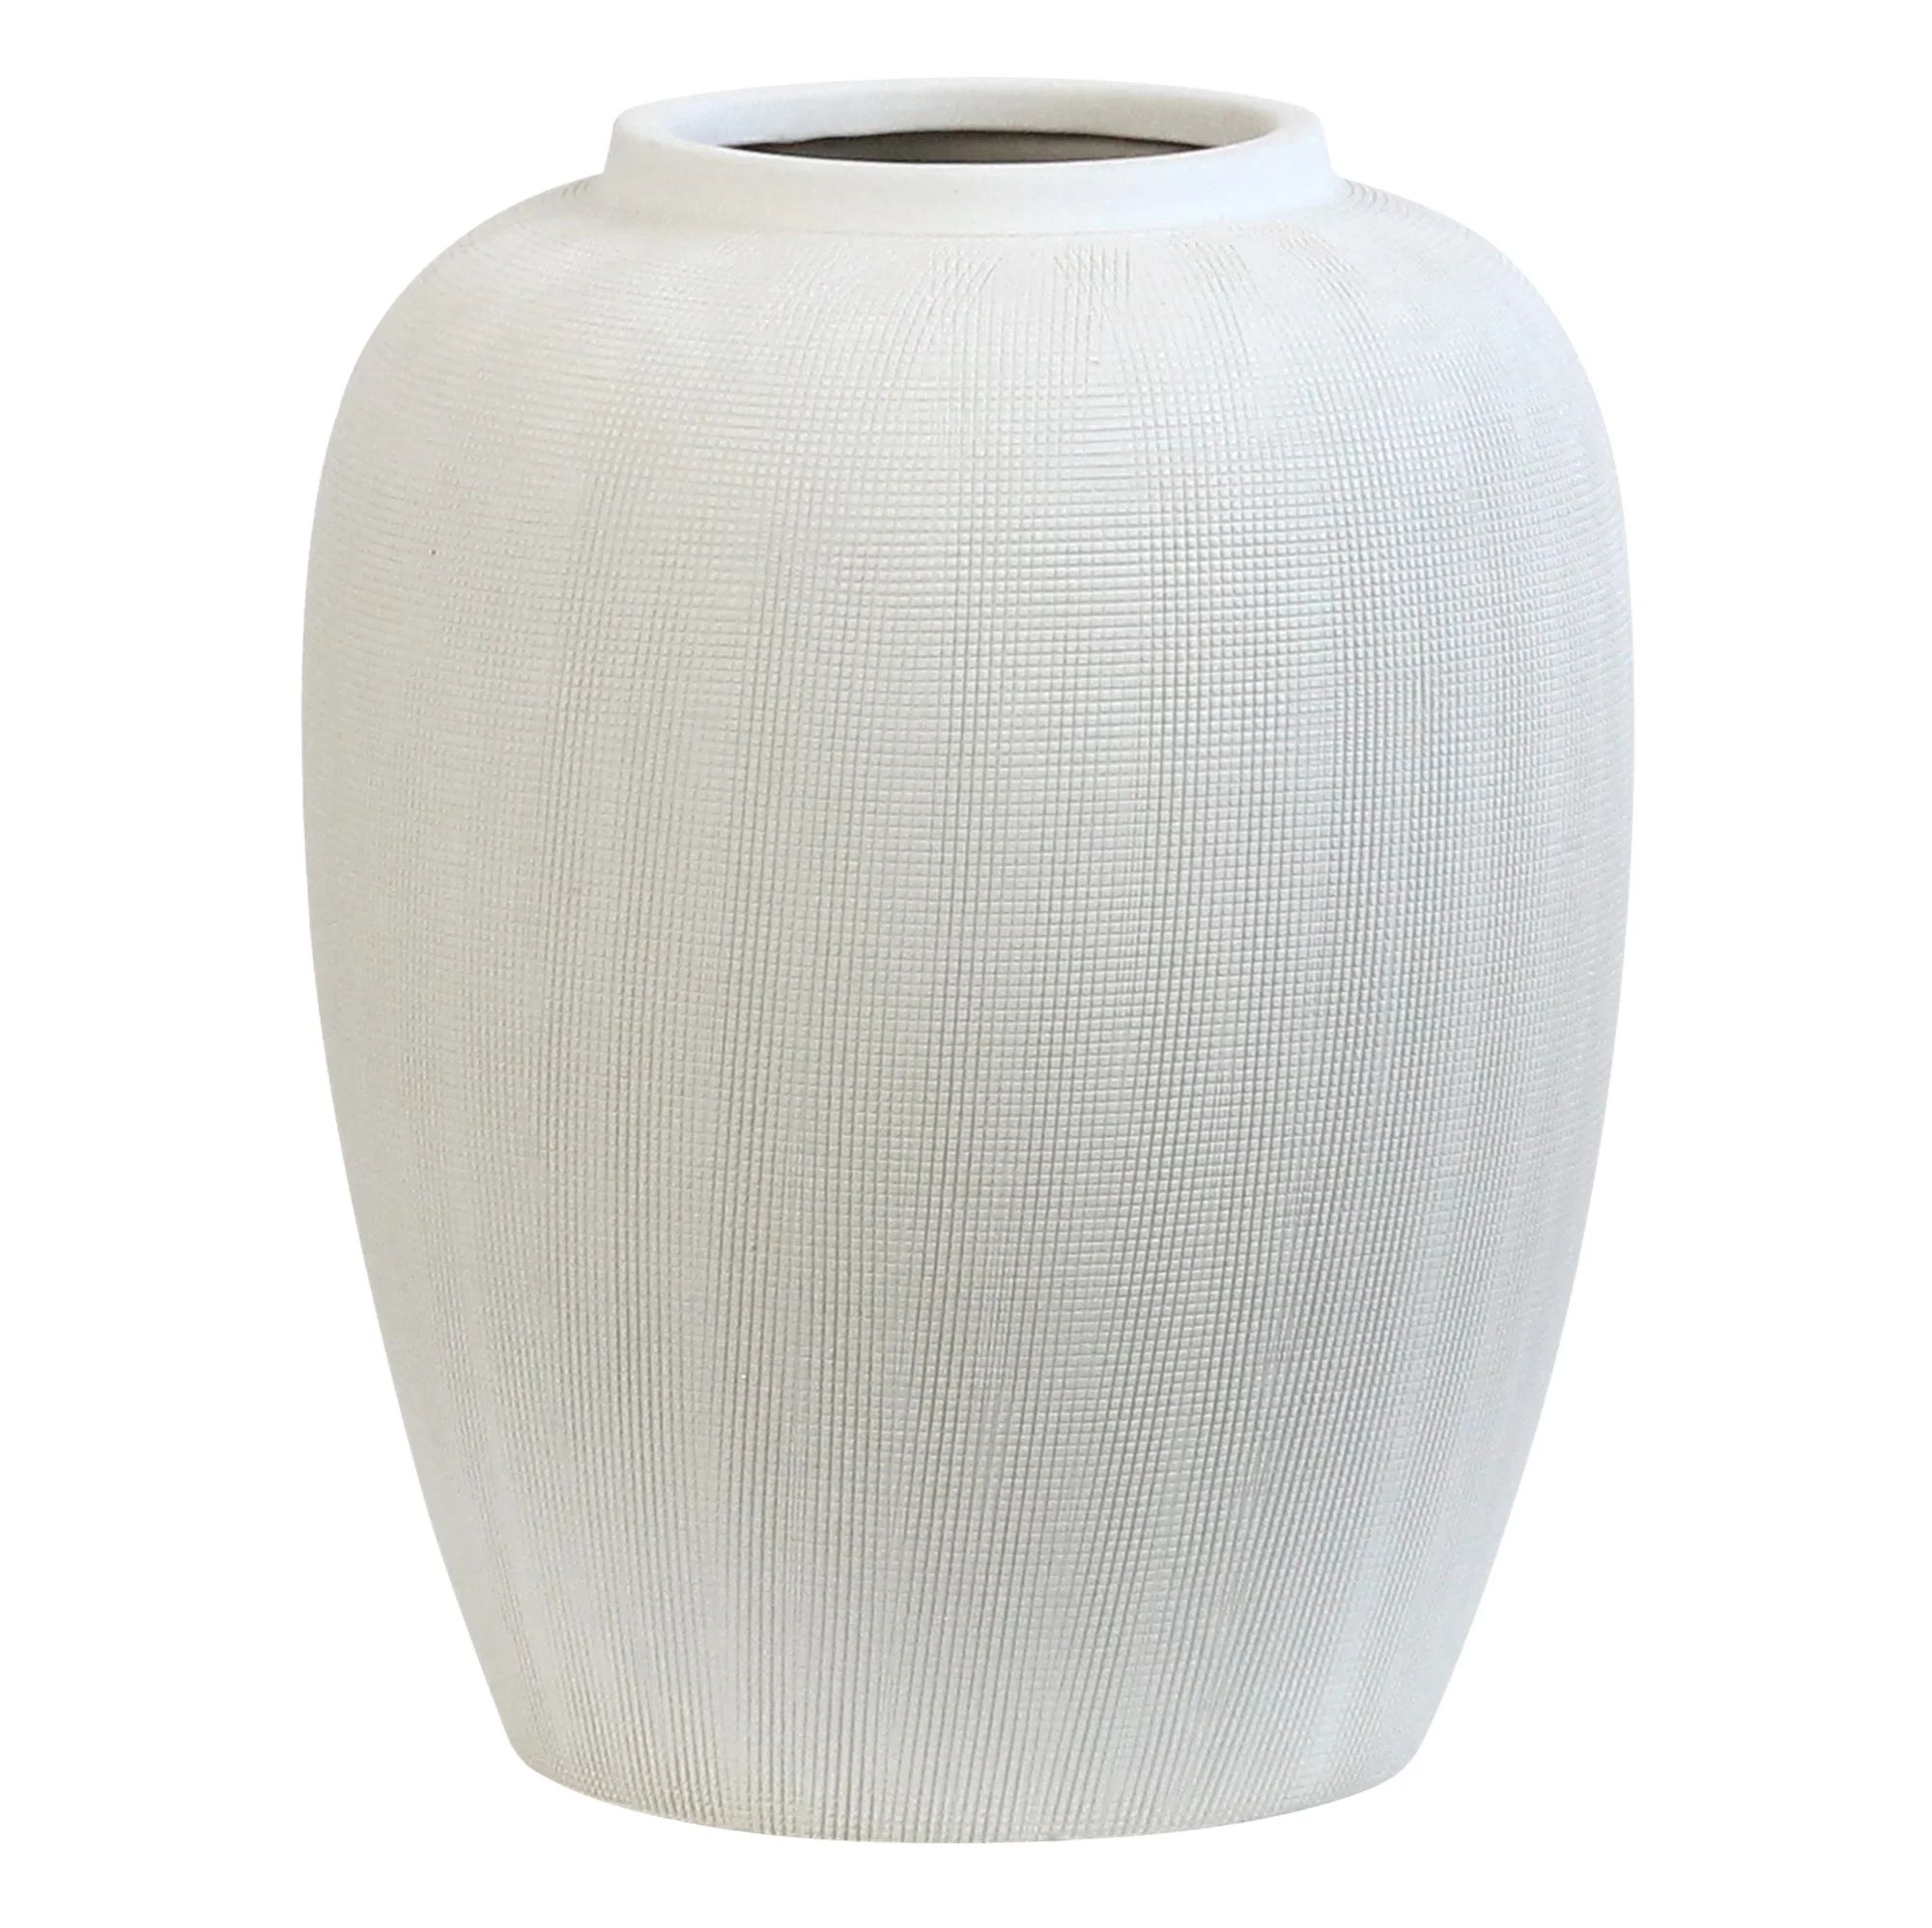 Rhodes Vase - Large Flower Vase - White Ceramic Vases Patterned | Walmart (US)